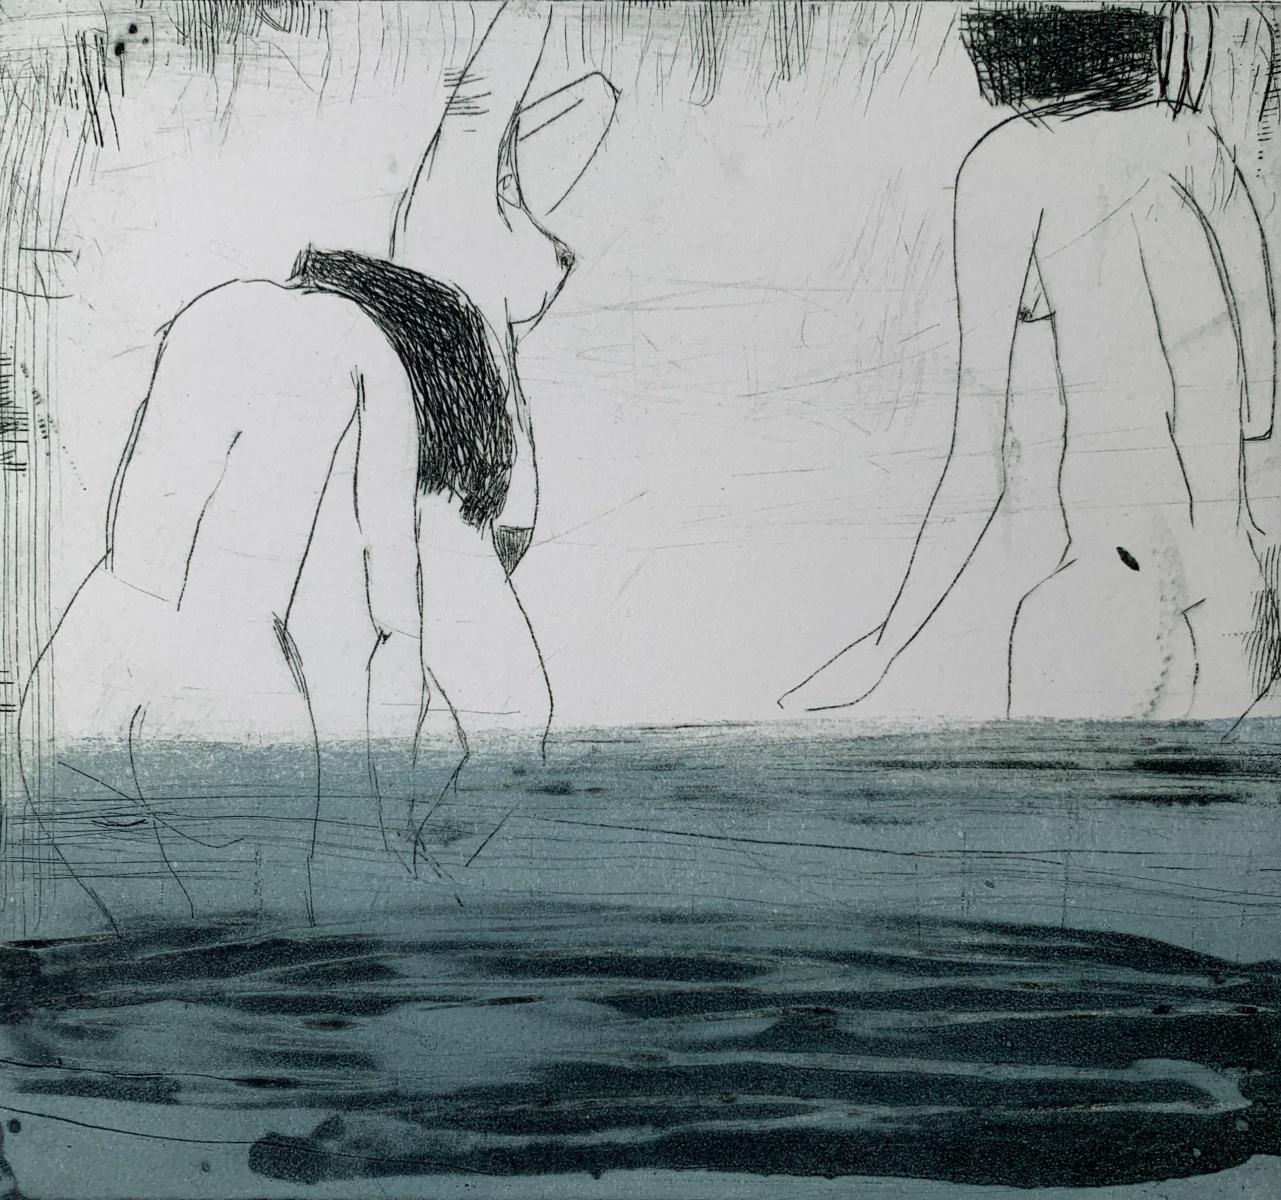 Marta Wakula-Mac Figurative Print - In water 5 - Contemporary Figurative Drypoint Etching Print, Female nude